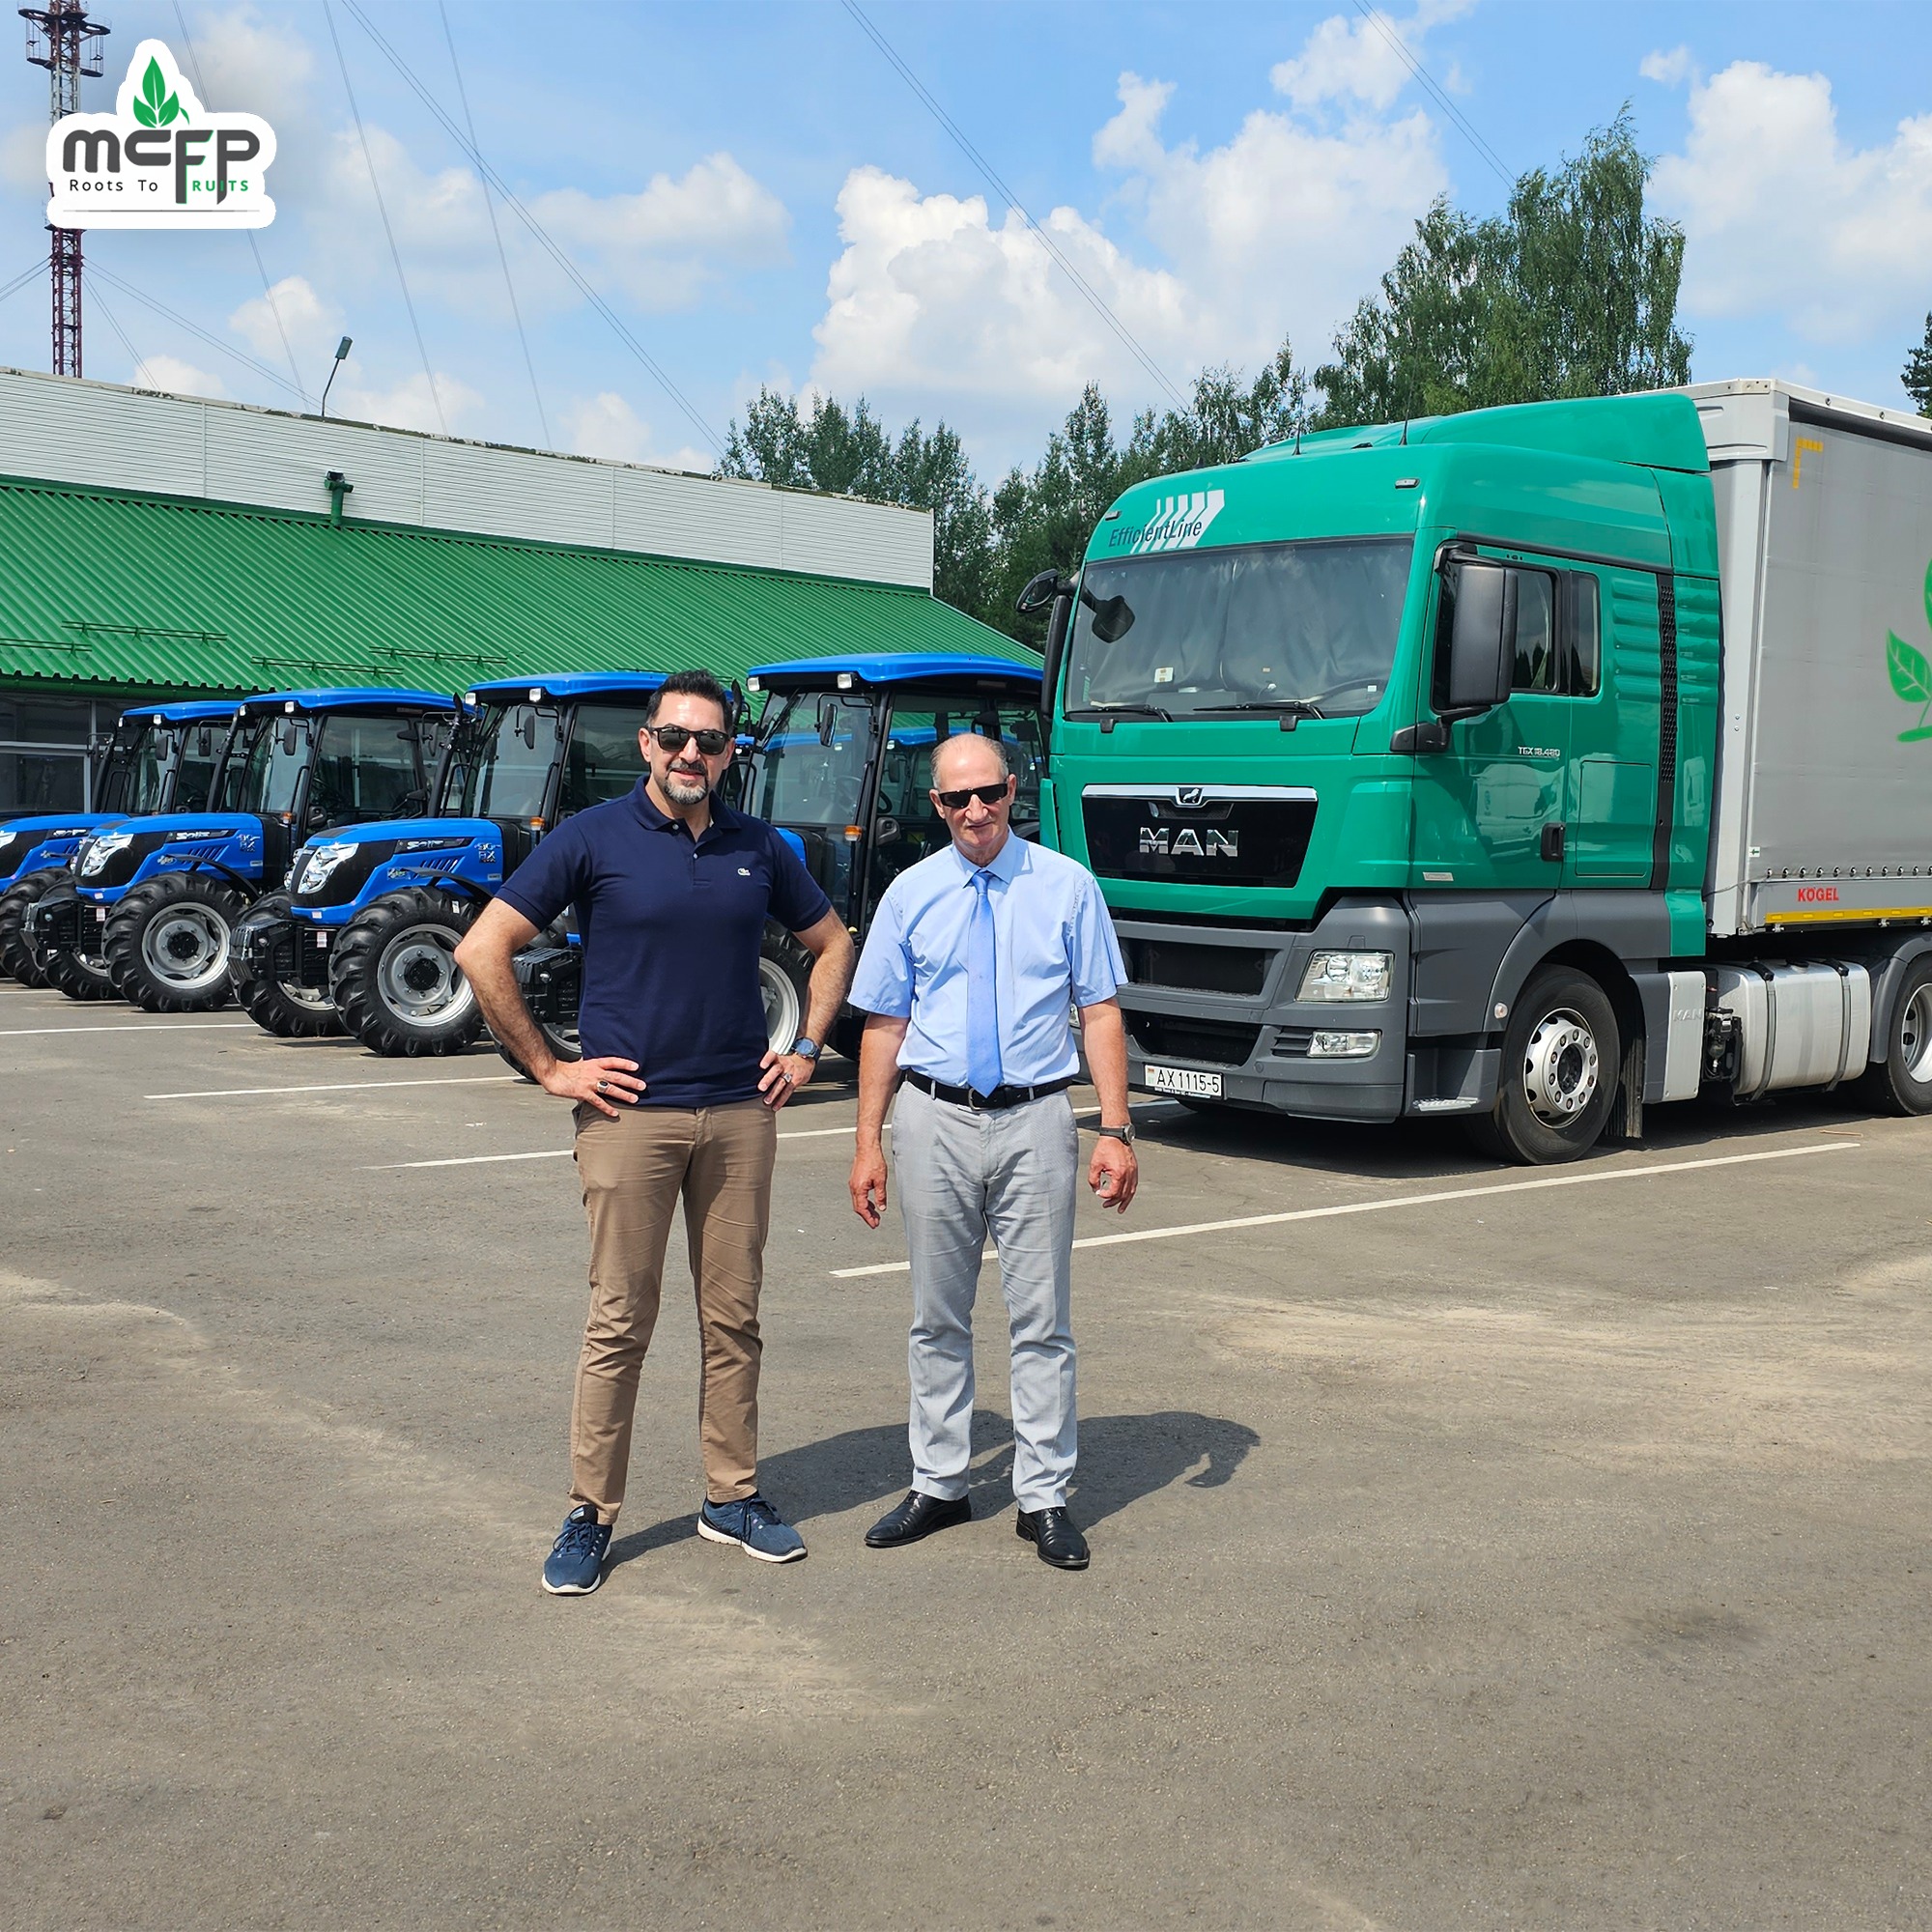 MCFP visits Agrimatco-96 in Belarus